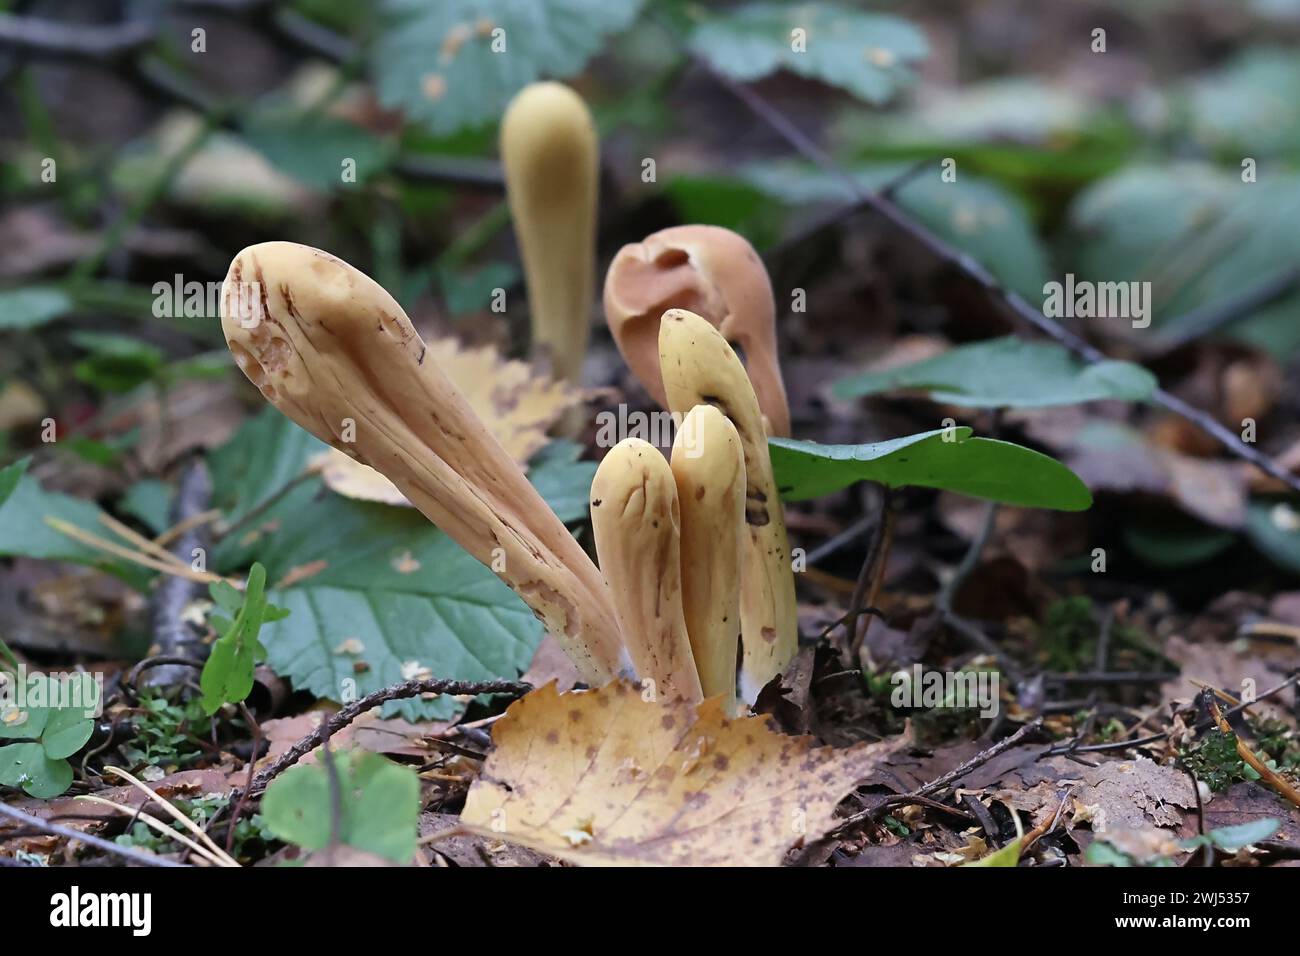 Clavariadelphus pistillaris, known as Giant Club fungus, wild fungi from Finland Stock Photo